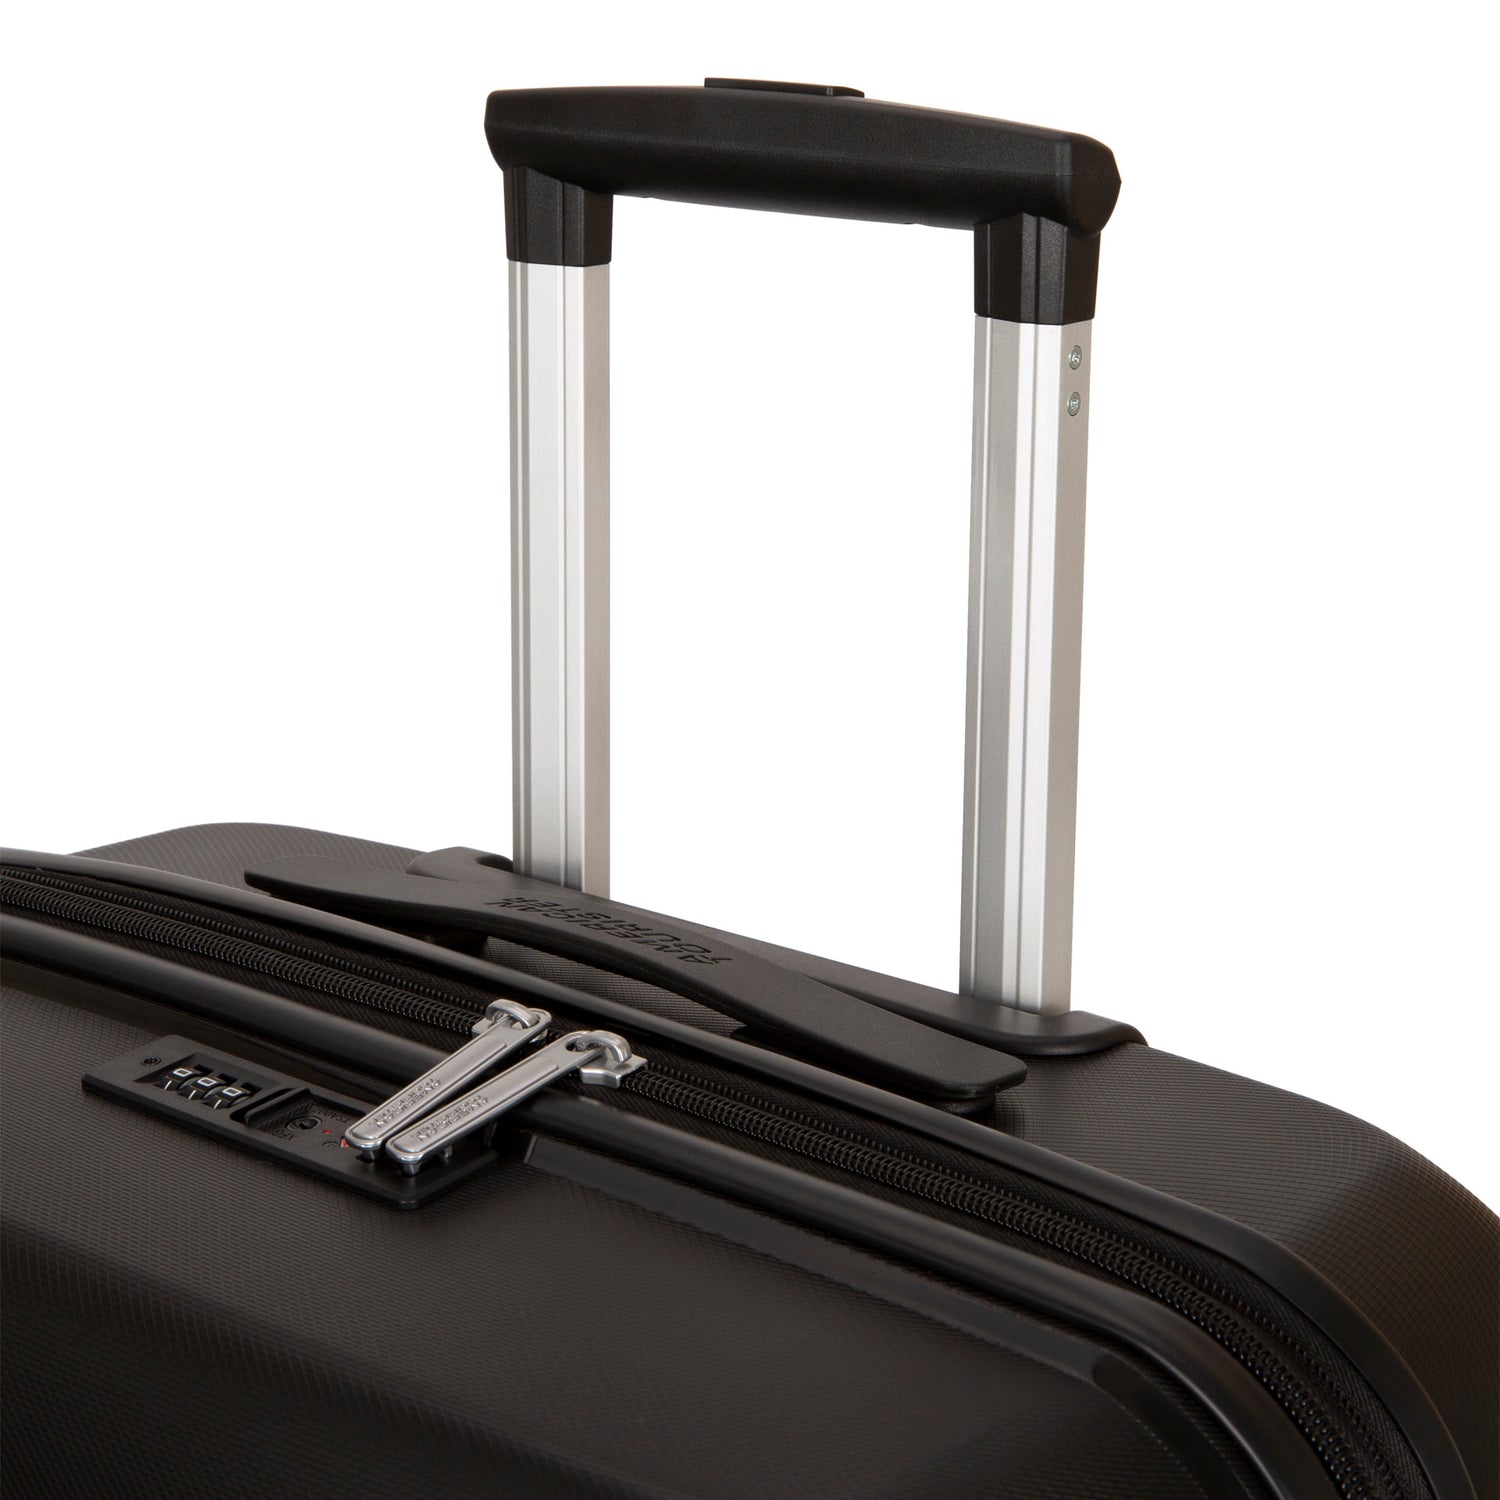 Breeze Hardside 3-Piece Luggage Set -  - 

        American Tourister
      
